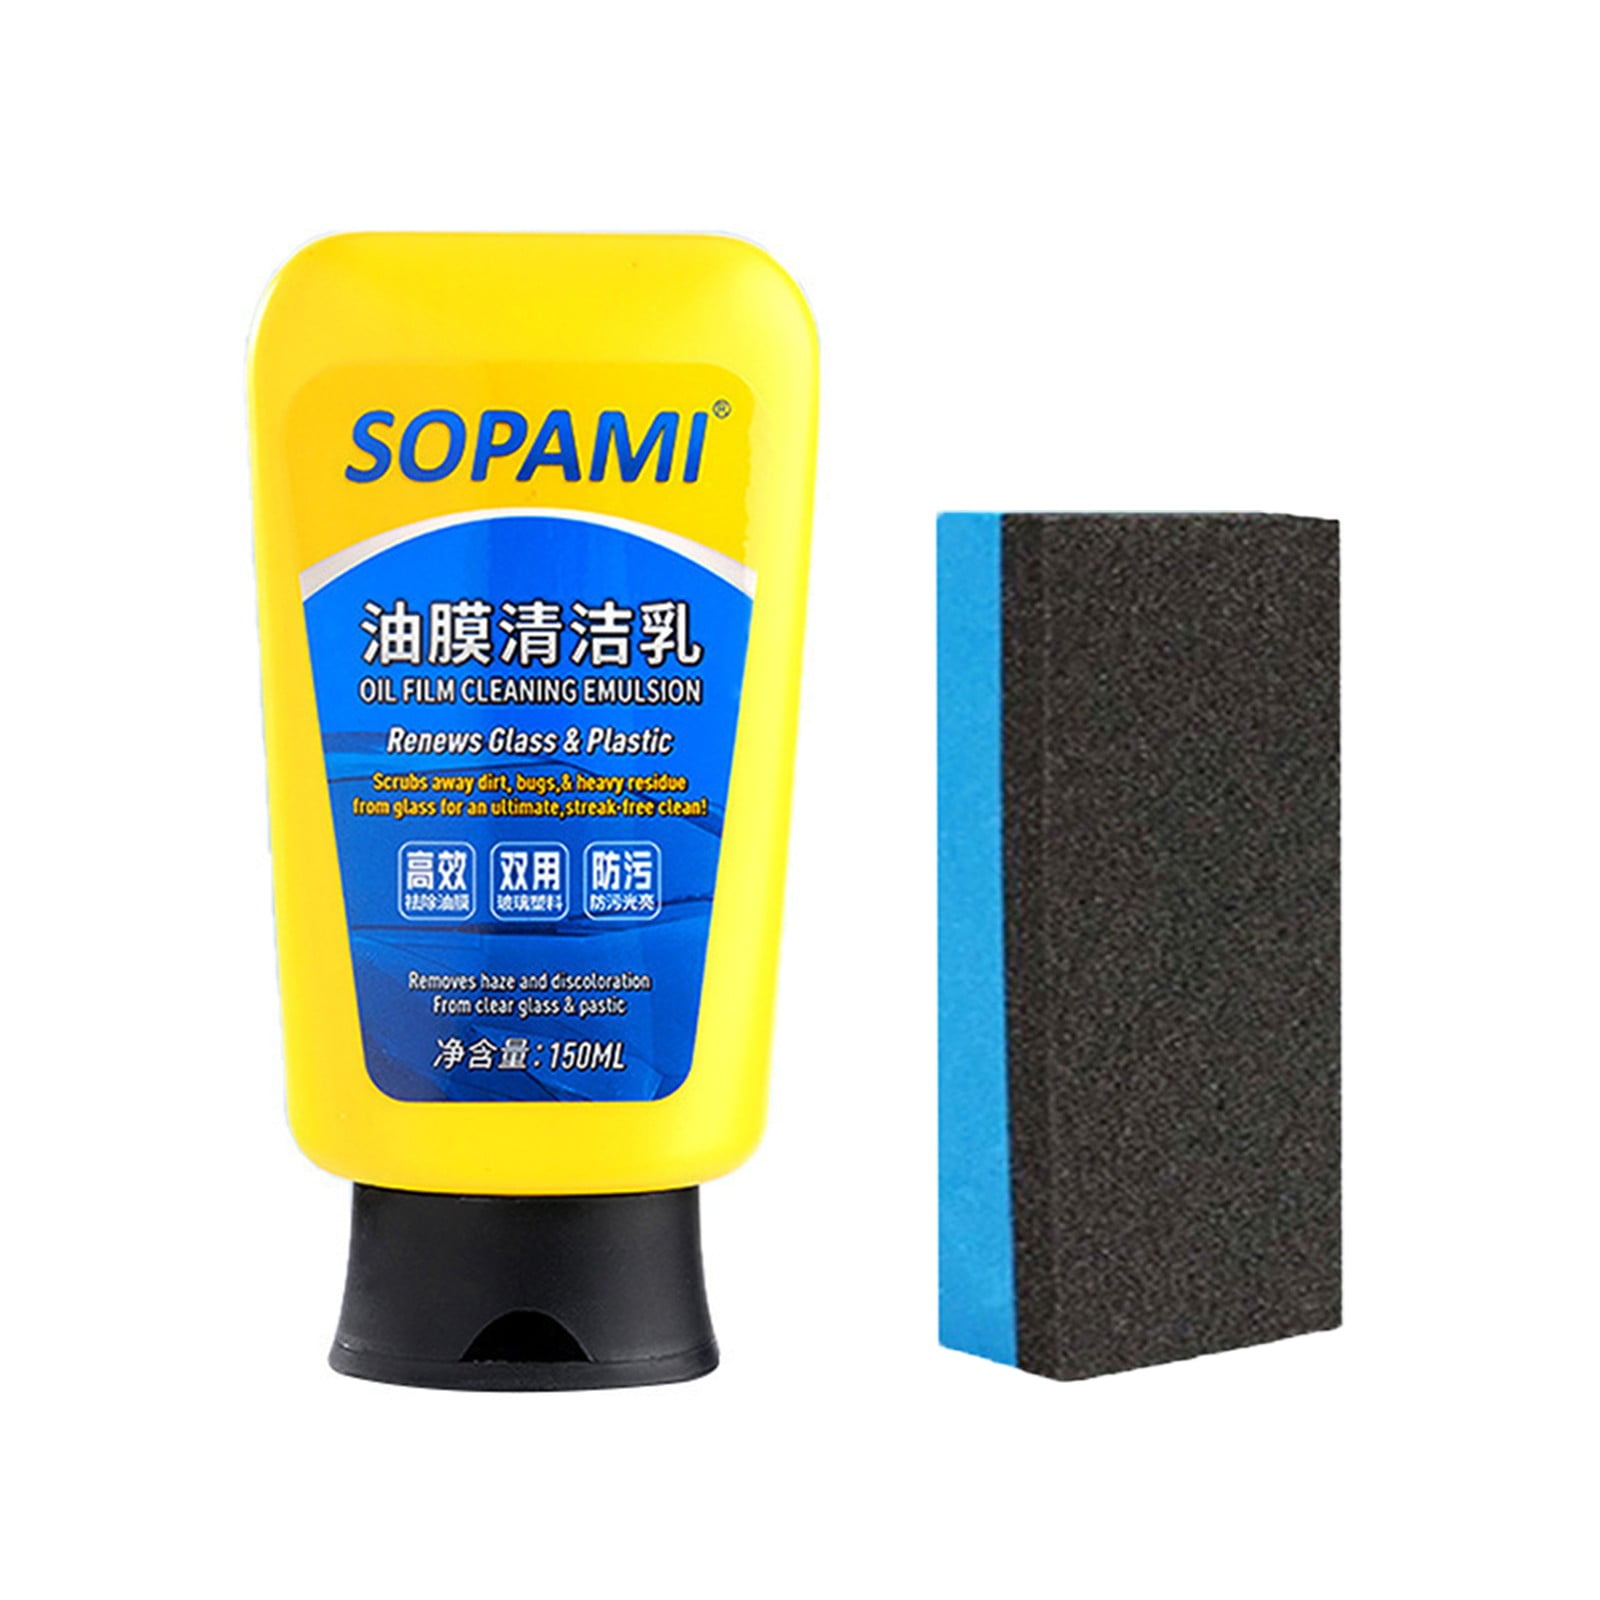  Wxfzasy Sopami Car Spray, Sopami Water Driving Coating